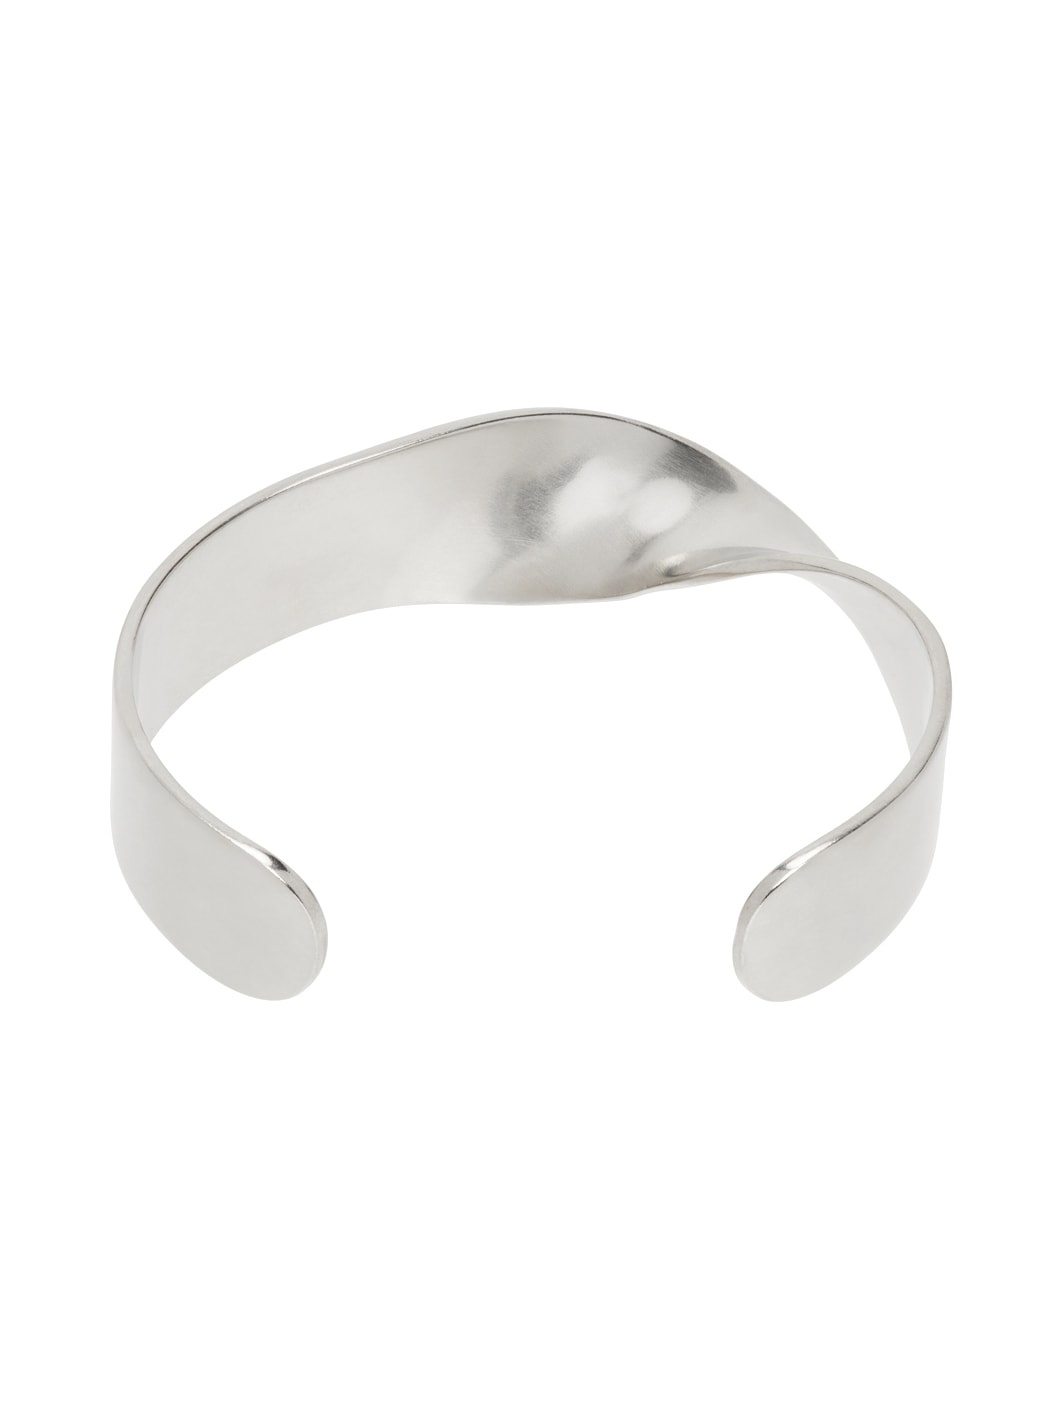 Silver Twisted Cuff Bracelet - 2